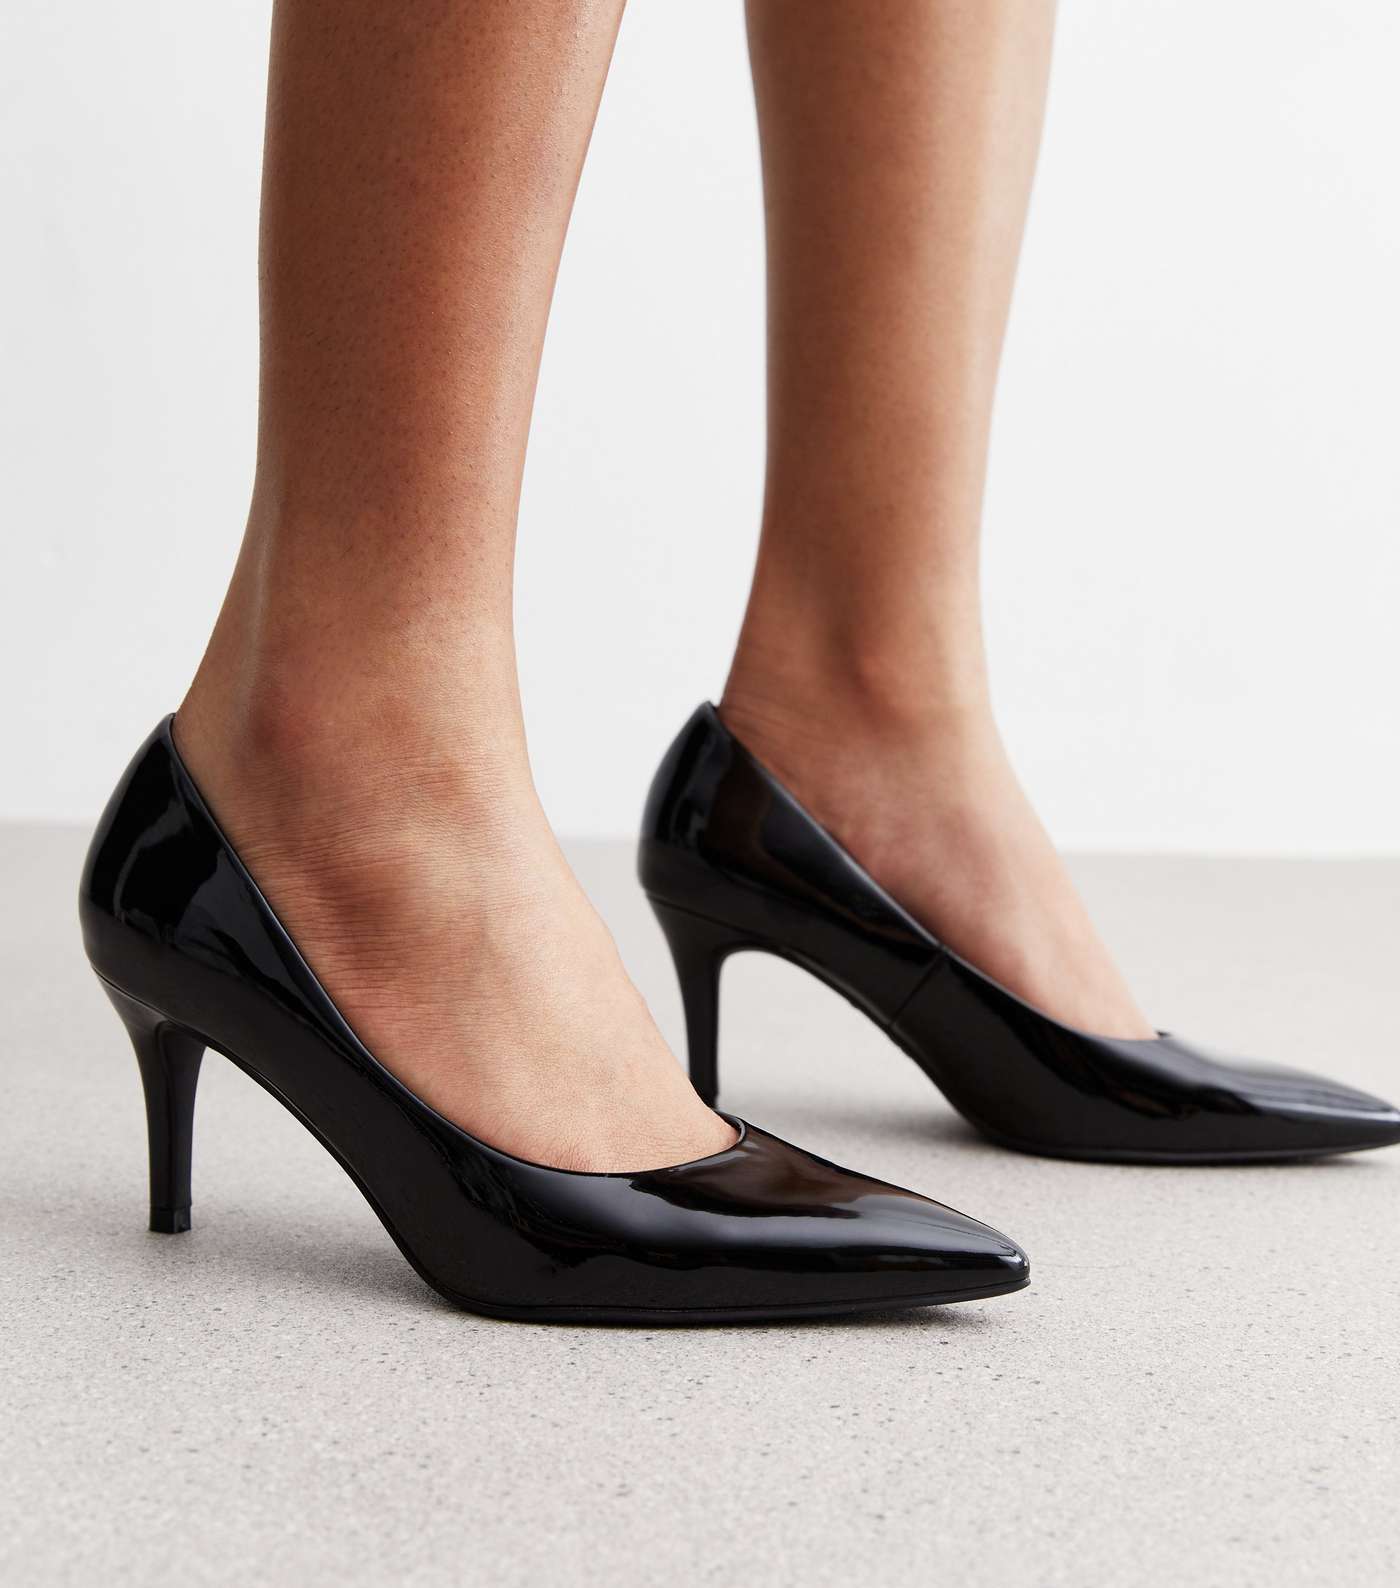 Black Patent Stiletto Heel Court Shoes Image 2